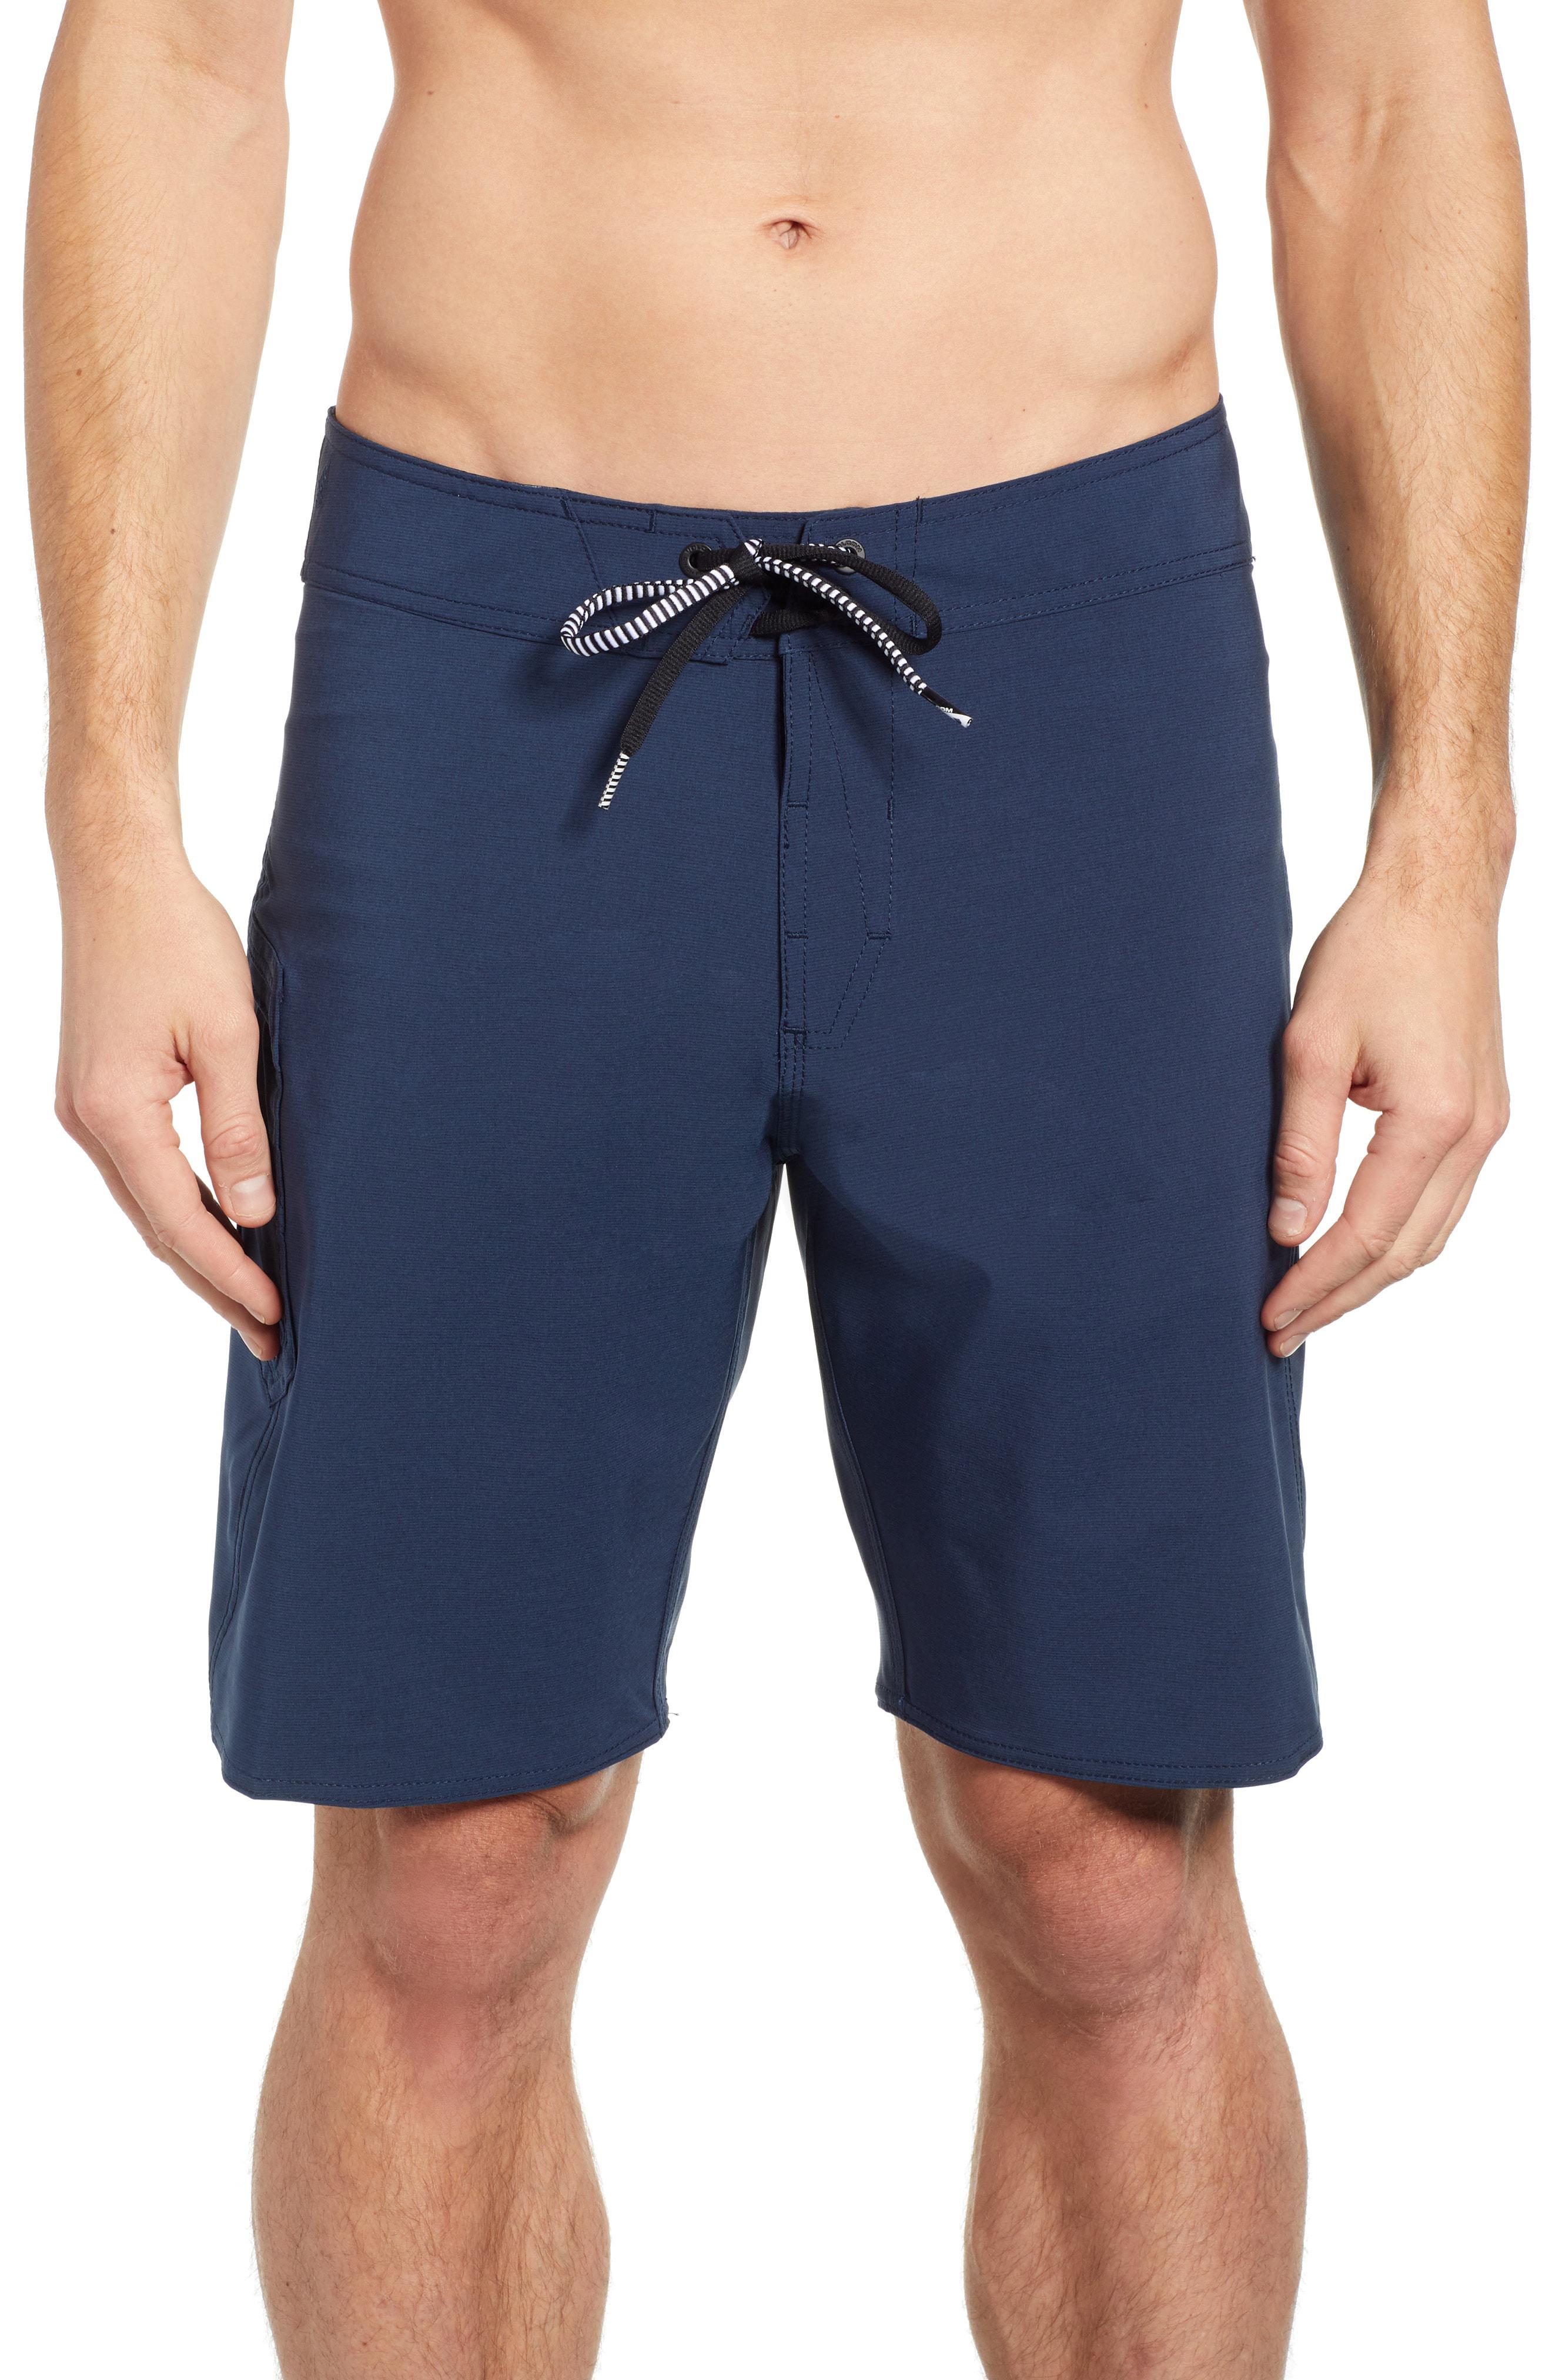 Volcom Lido Mod Board Shorts in Blue for Men - Lyst